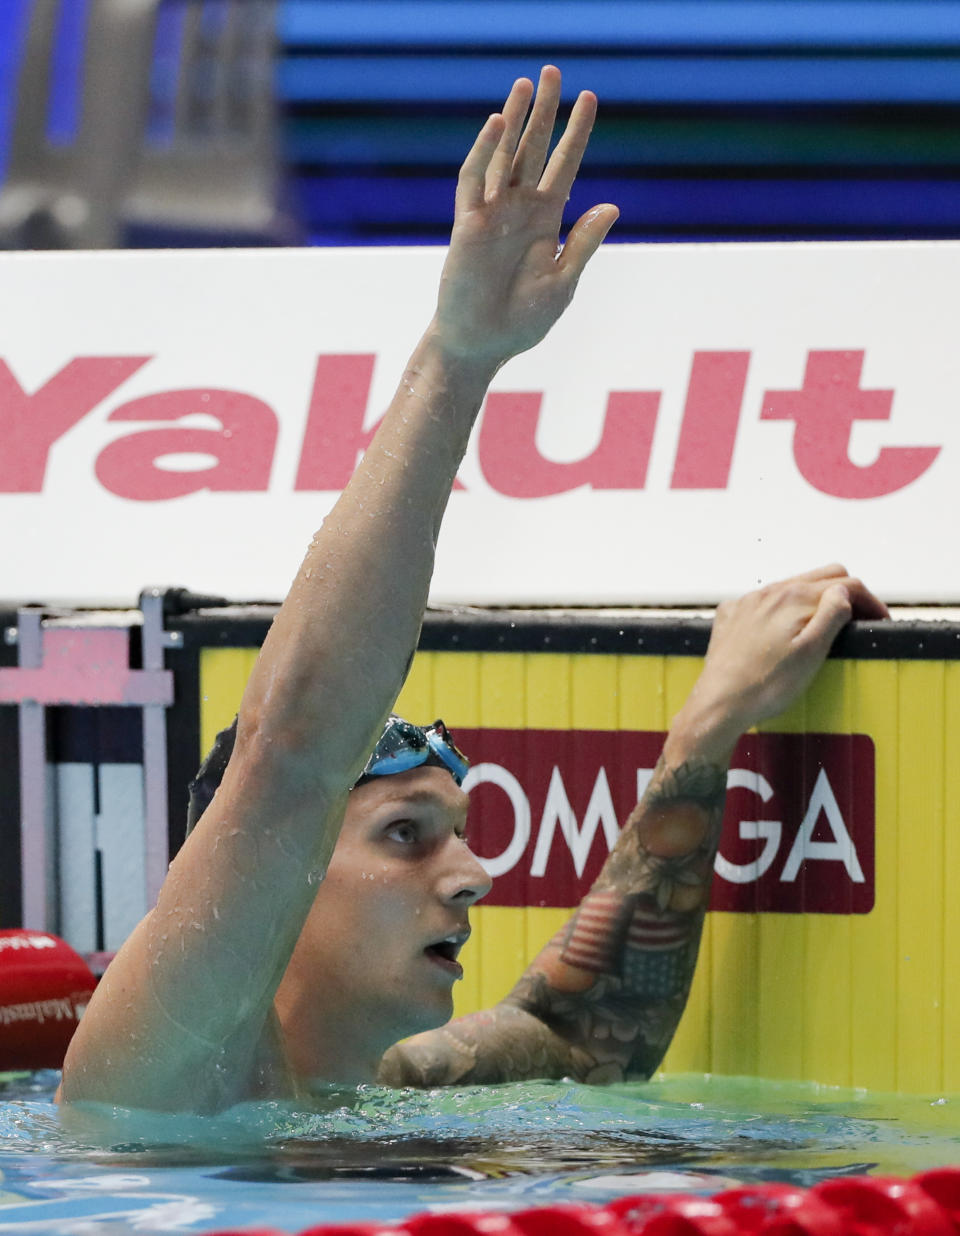 United States' Caeleb Dressel waves after winning the men's 50m butterfly final at the World Swimming Championships in Gwangju, South Korea, Monday, July 22, 2019. (AP Photo/Lee Jin-man)